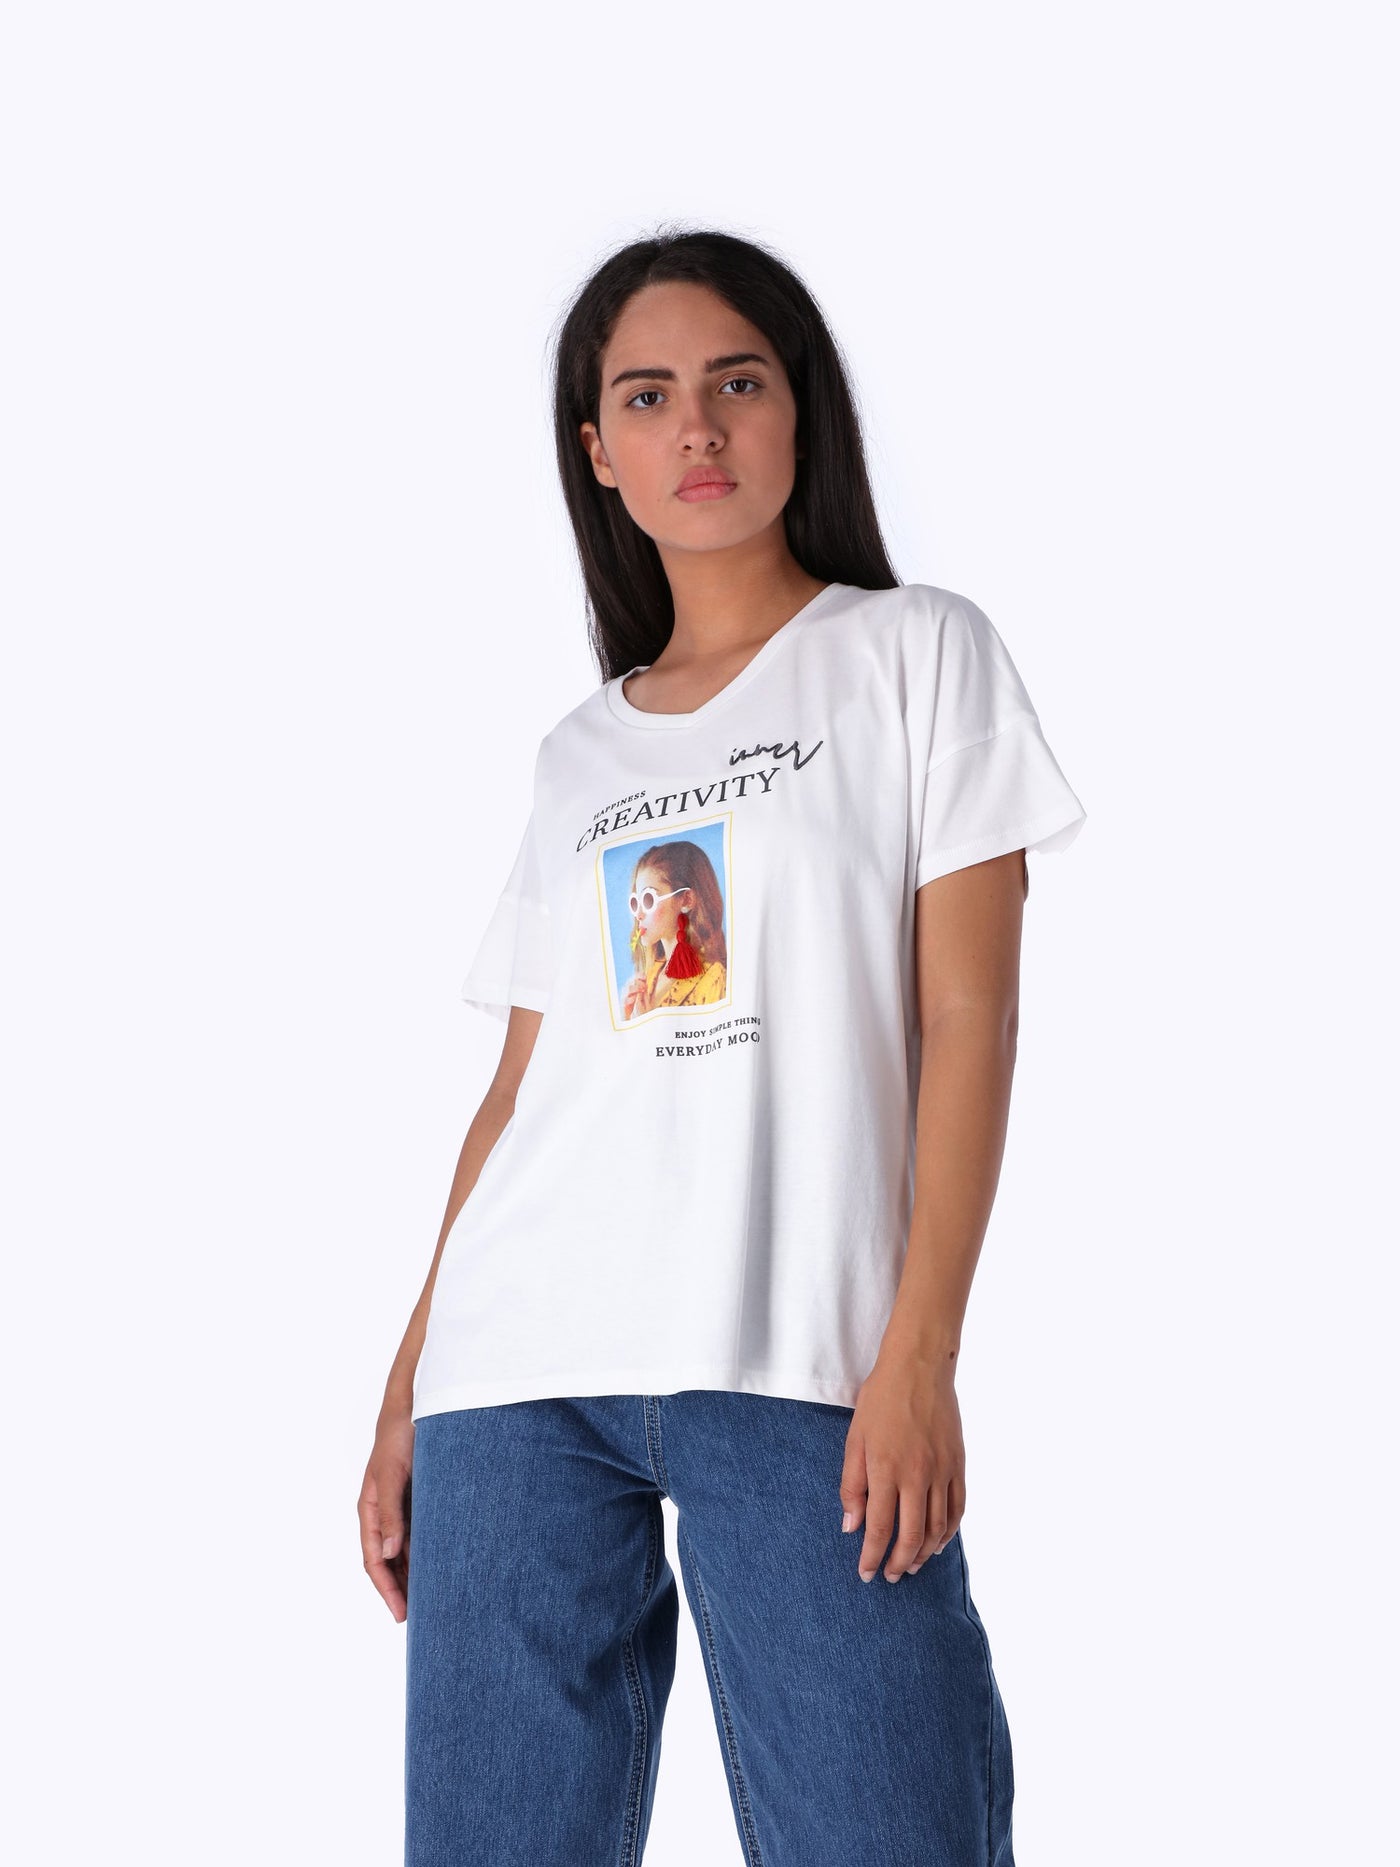 OR Women's Image Printed T-Shirt